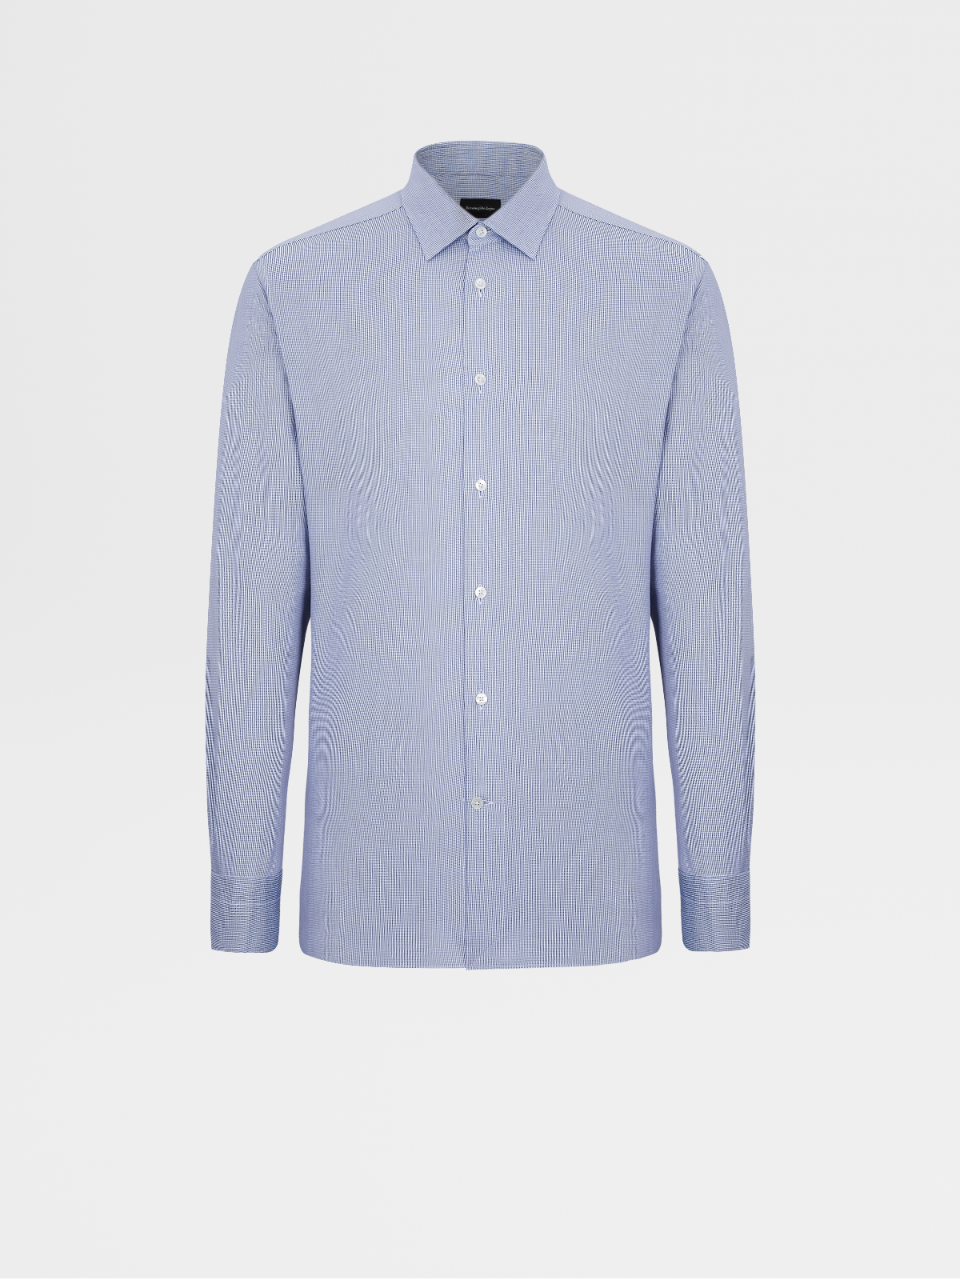 Micro-textured Blue Trofeo™ Cotton Tailoring Shirt, City Slim Fit